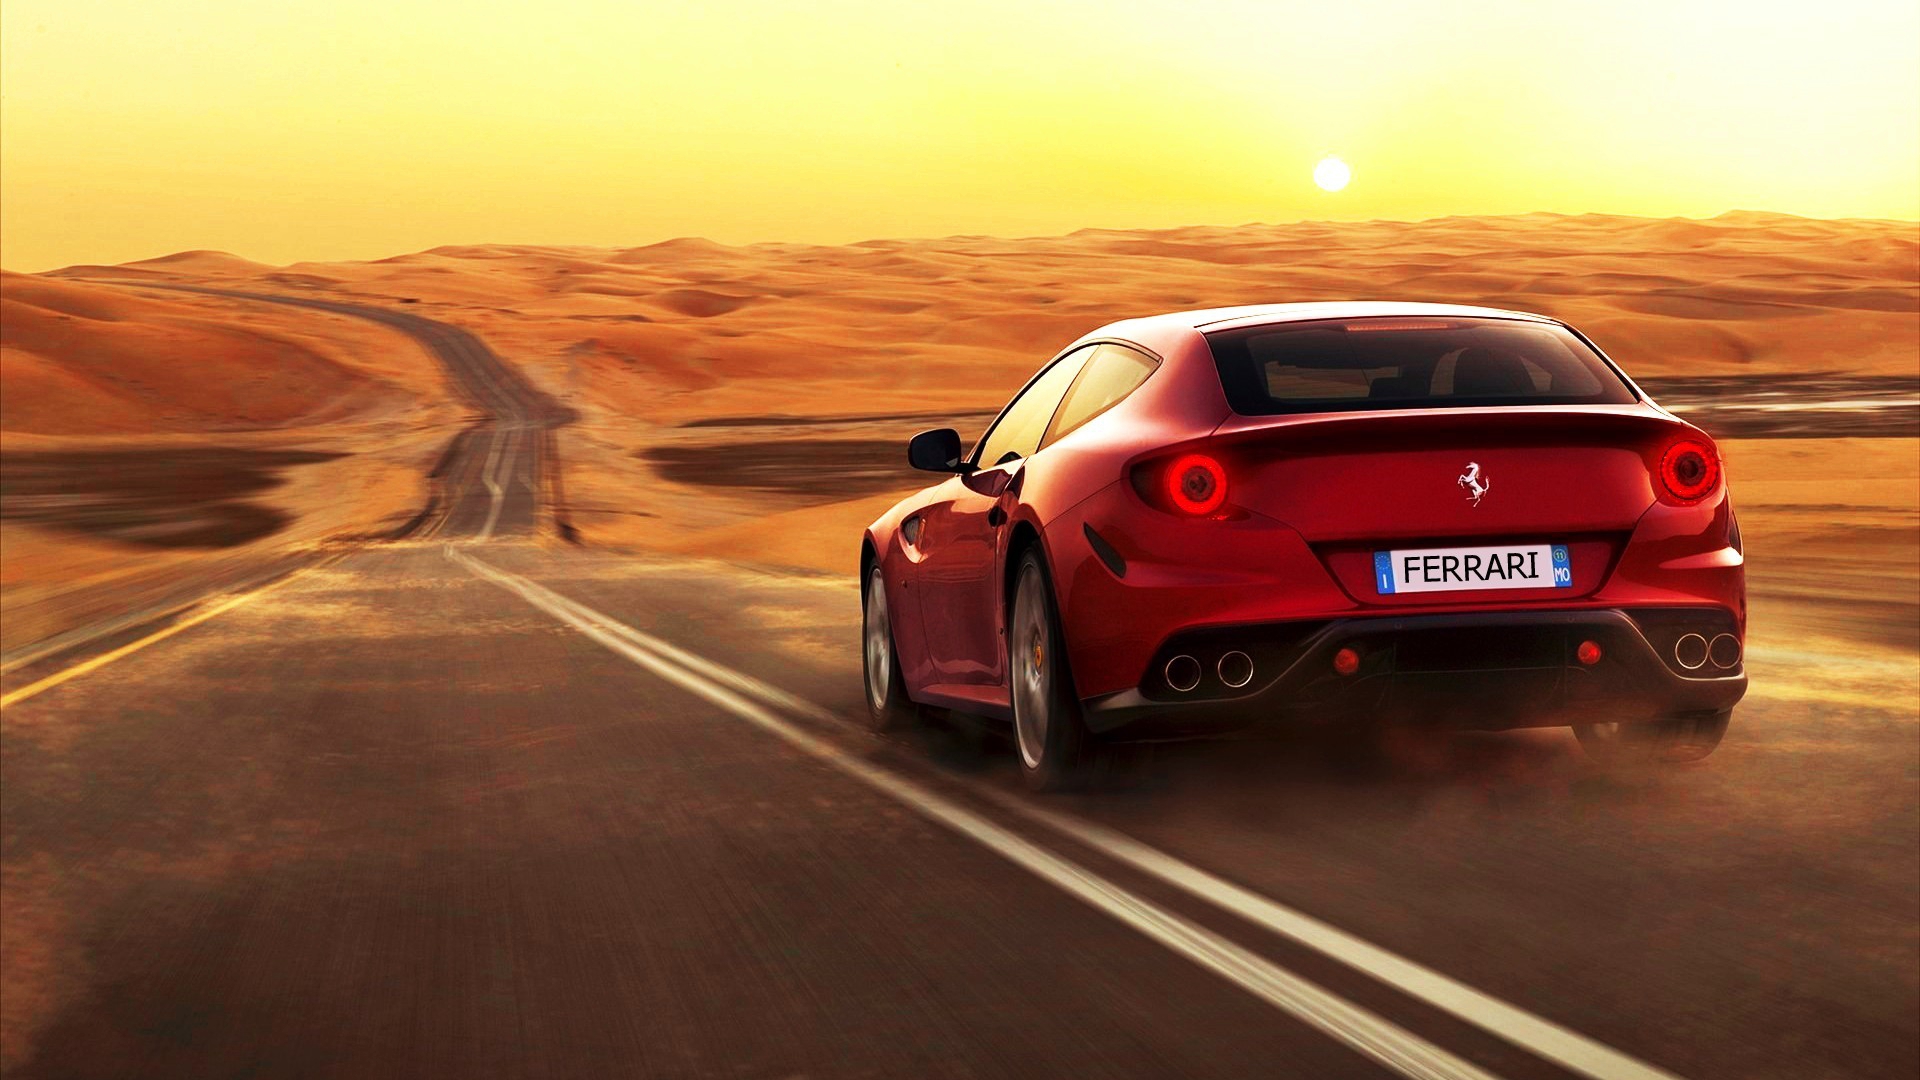 Top 10 Ferrari Hd Wallpaper - Car Status In English - HD Wallpaper 